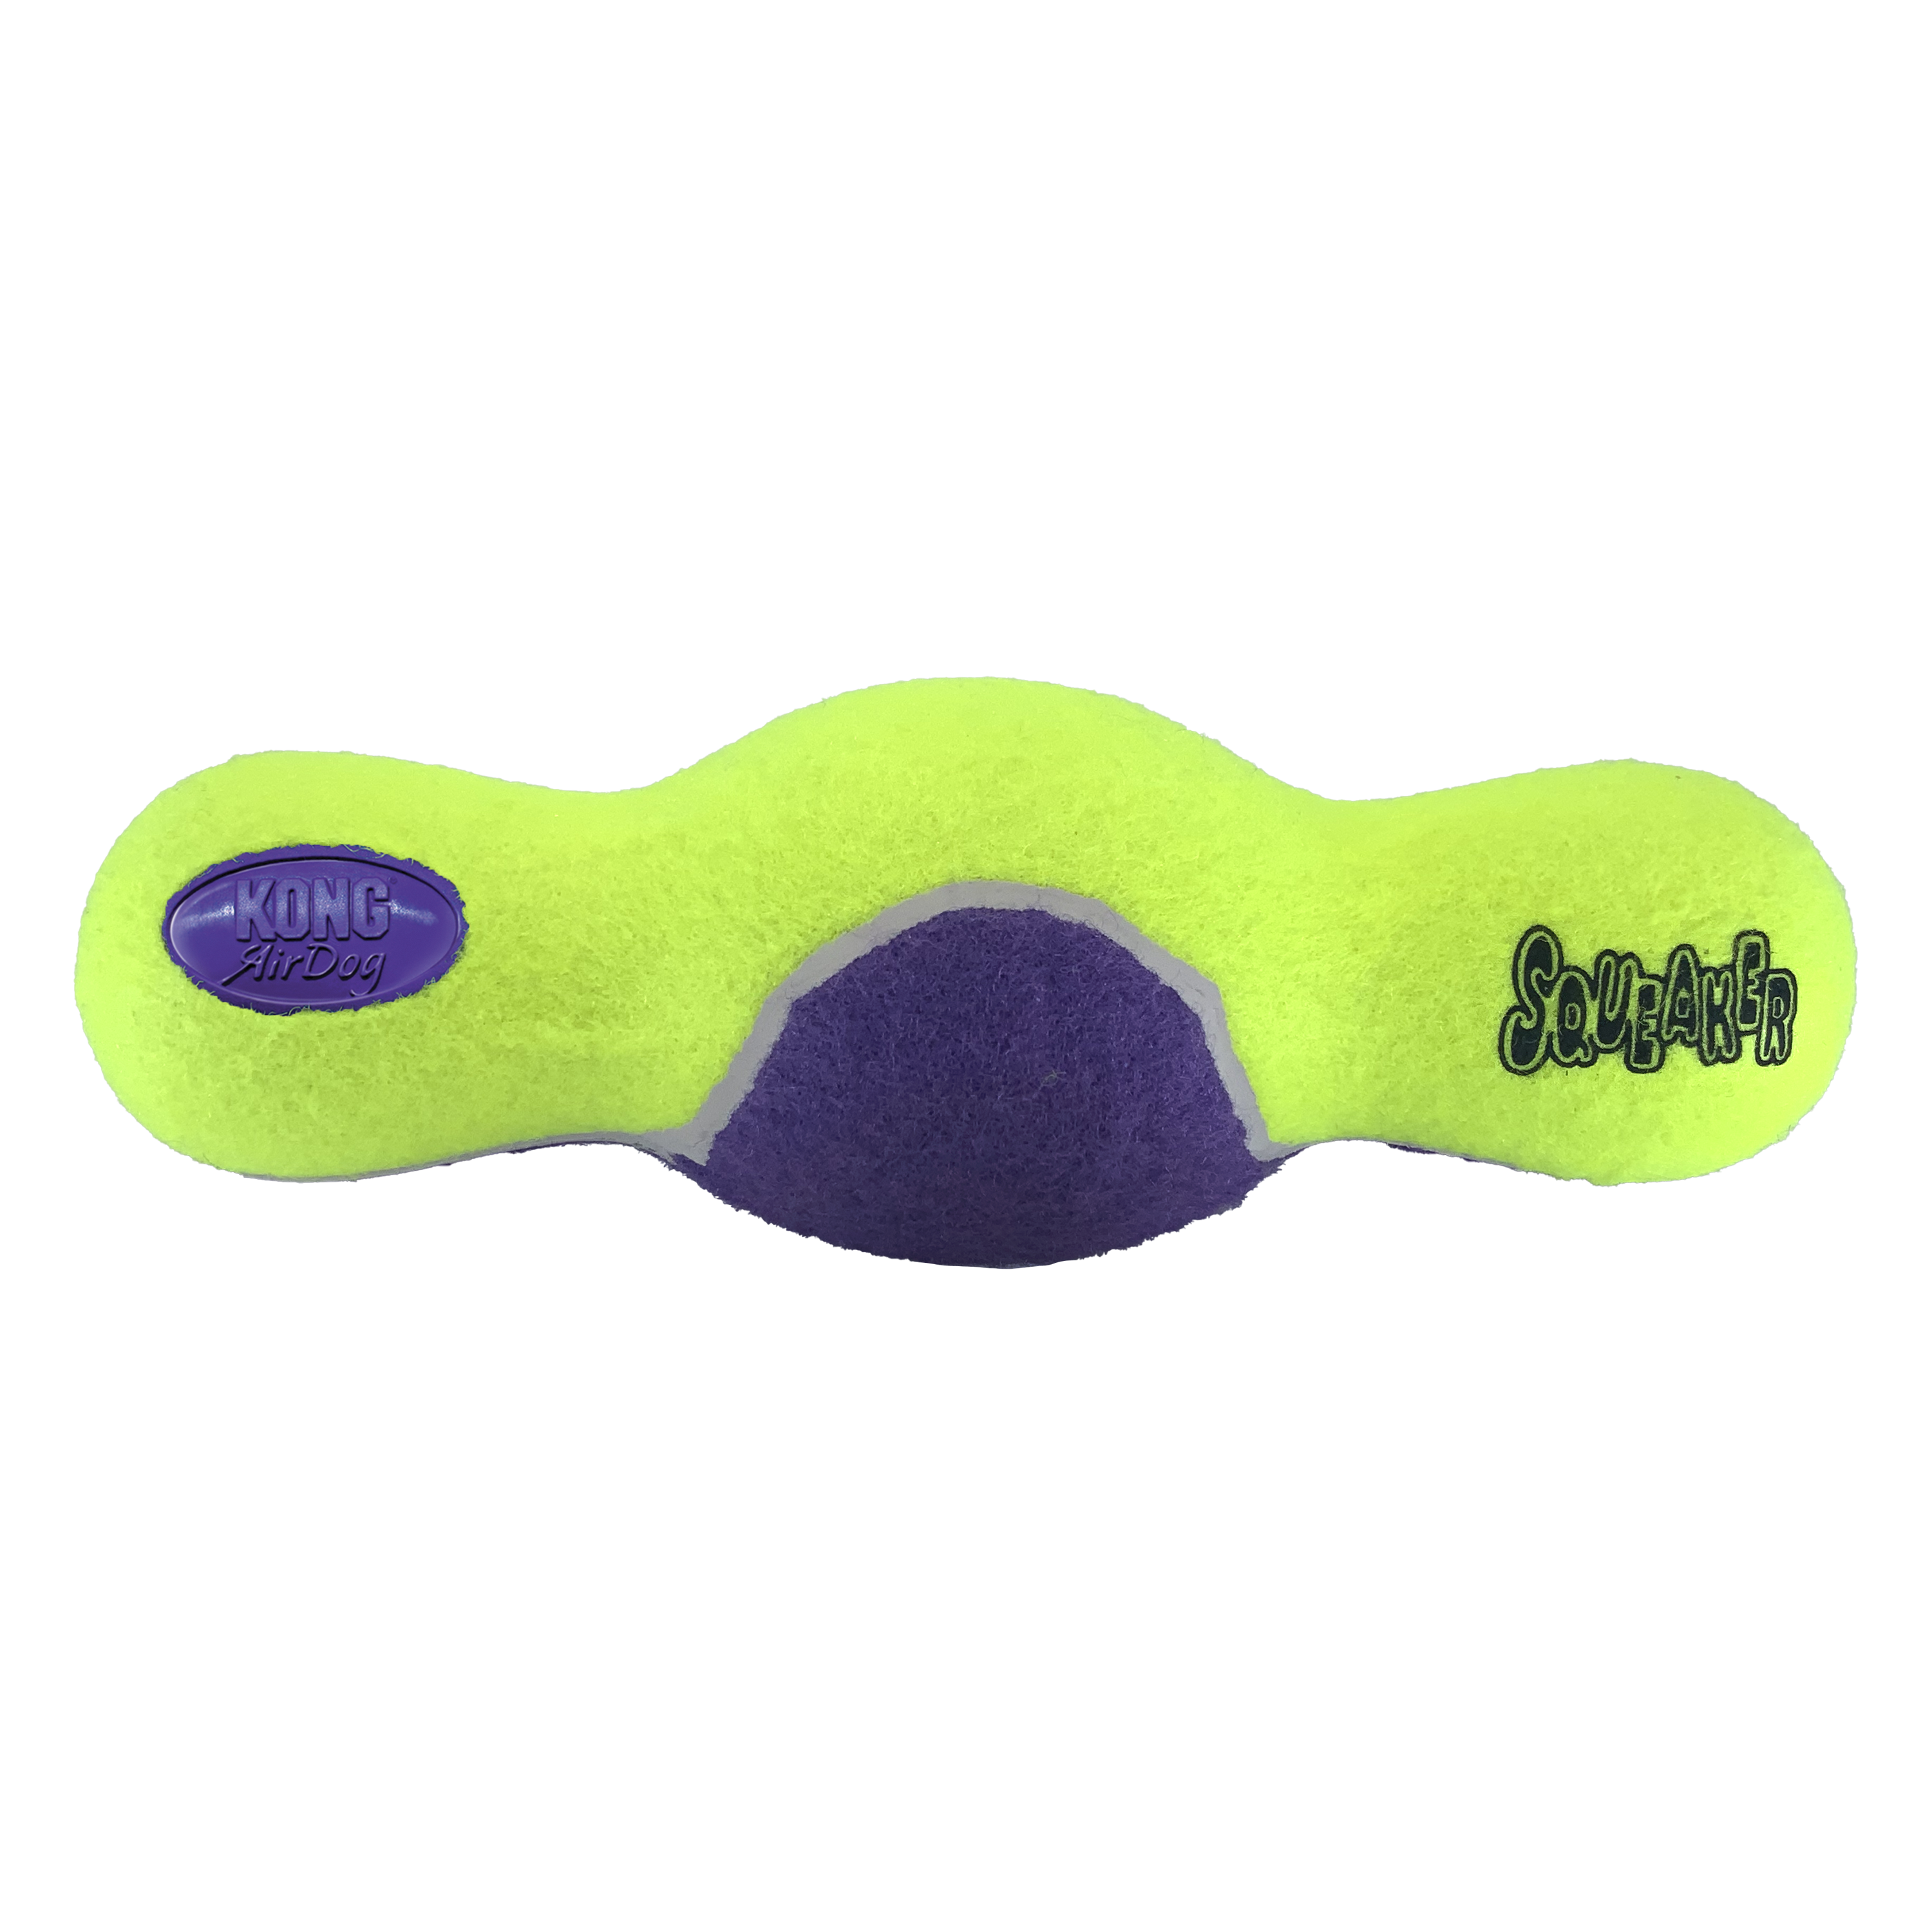 AirDog Squeaker Roller offpack imagen de producto